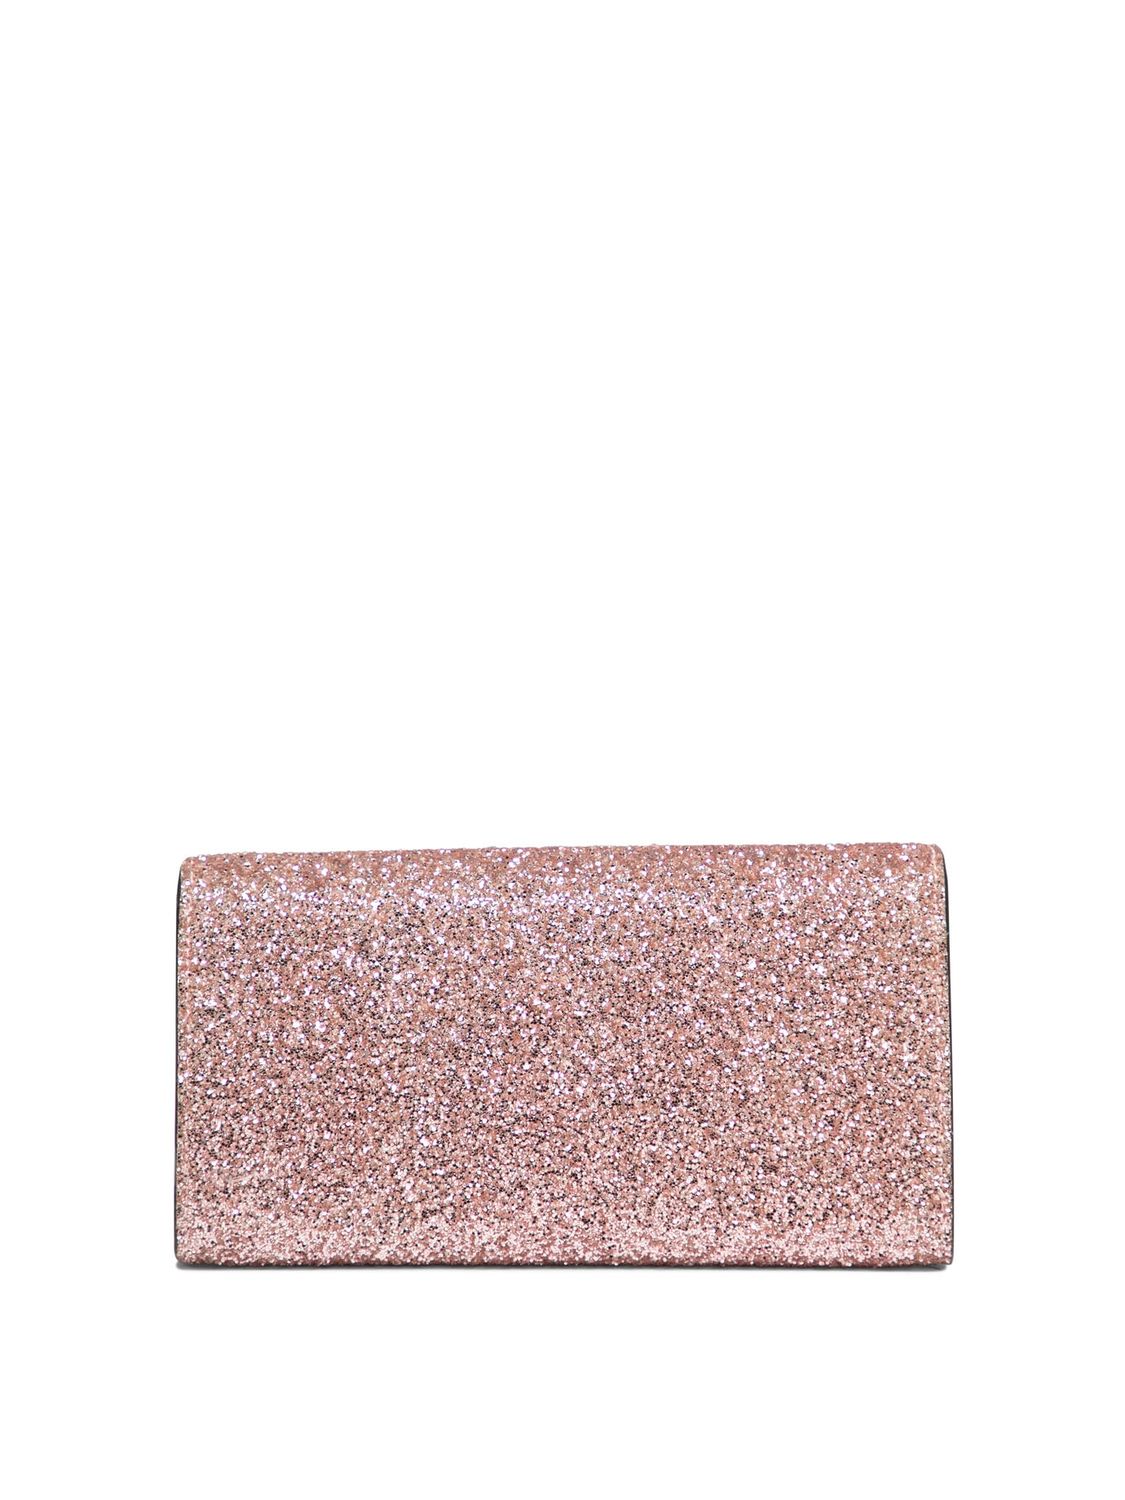 JIMMY CHOO Pink Glitter Avenue Wallet with Pearl Strap for Women